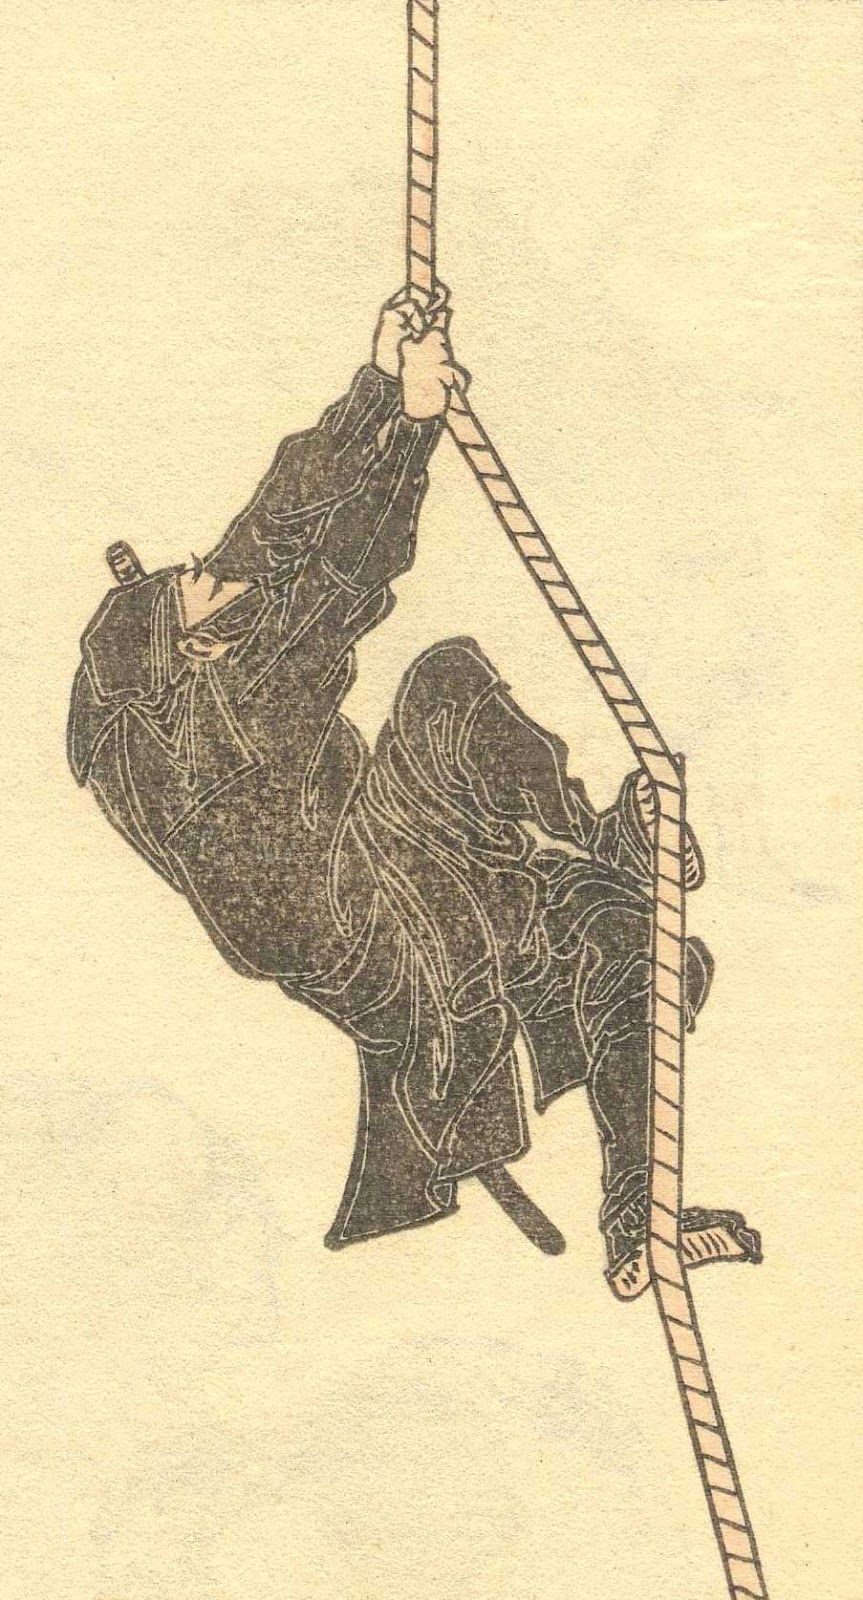 The archetypical ninja by Hokusai, 1817